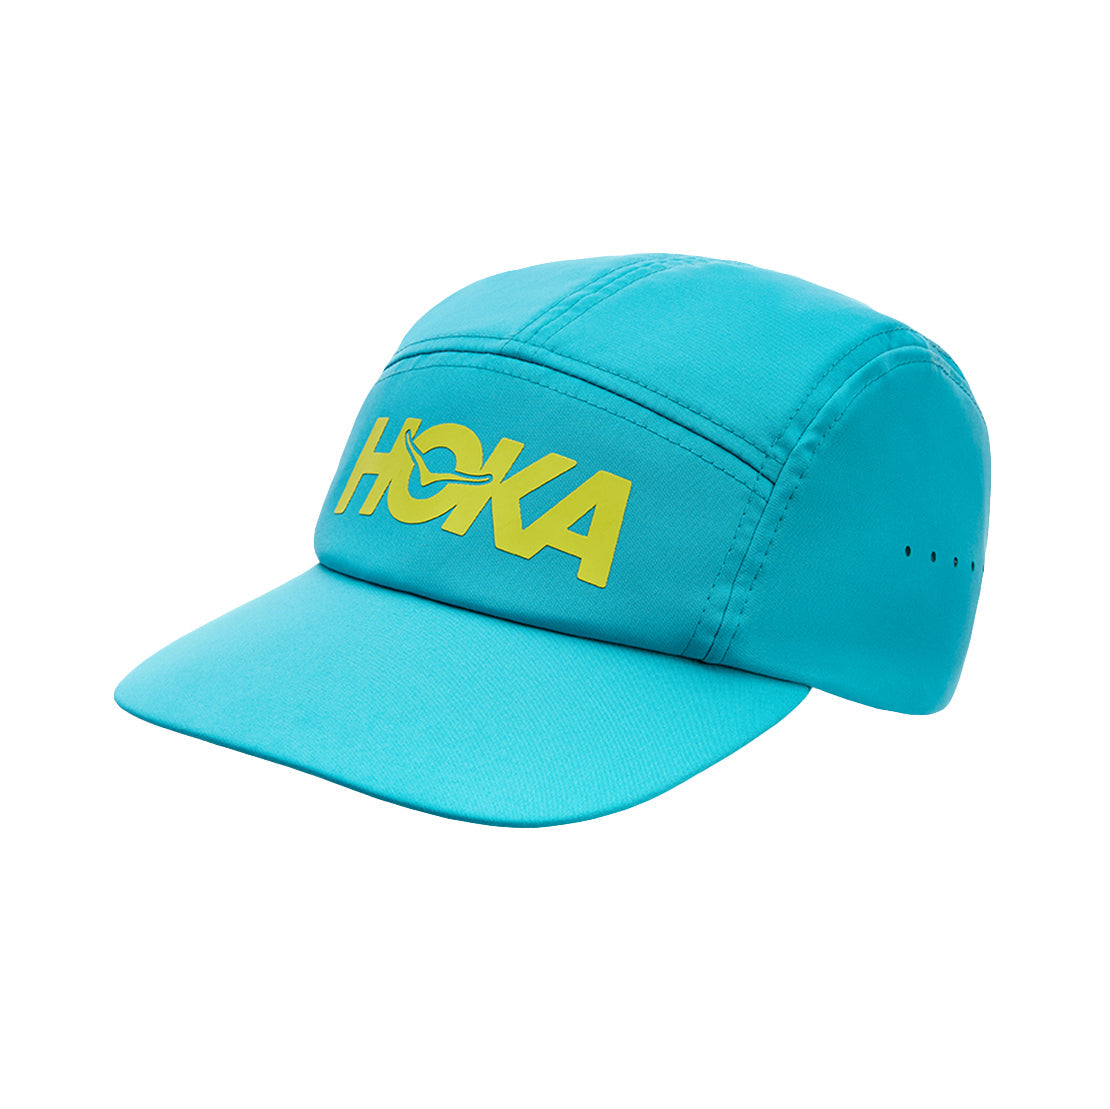 HOKA Performance Hat in Ceramic